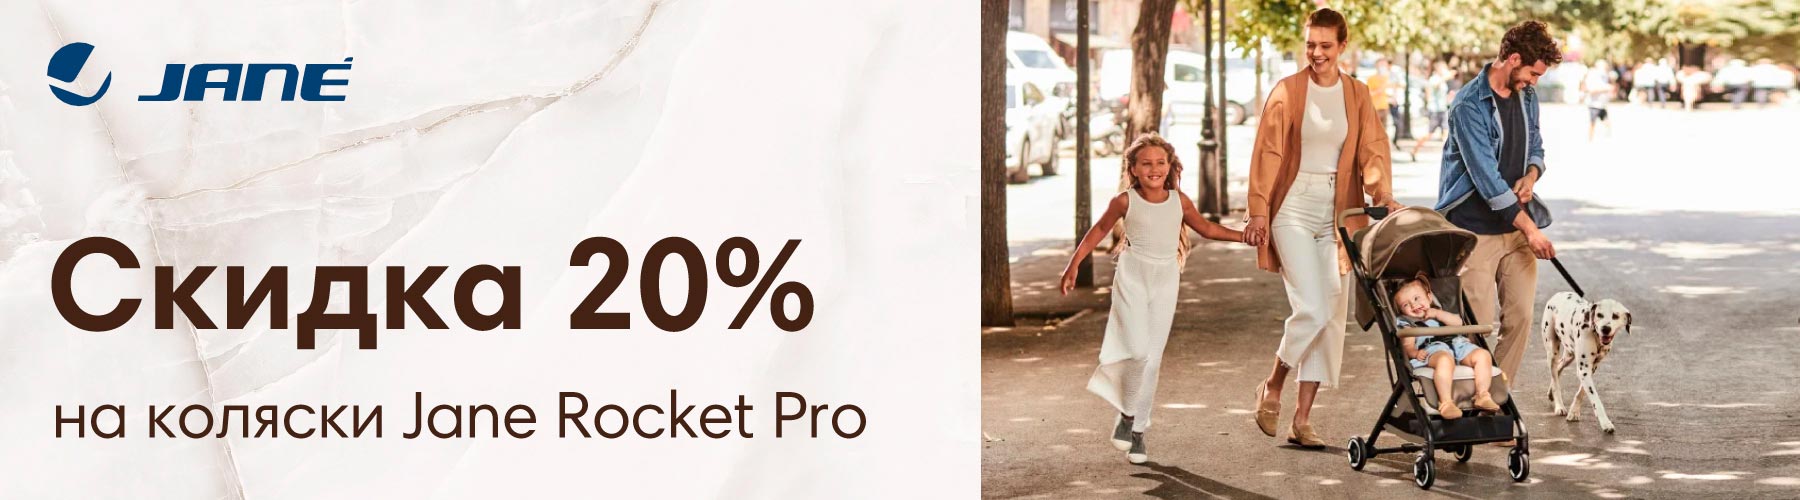 Скидка 20% на коляску Jane Rocket Pro